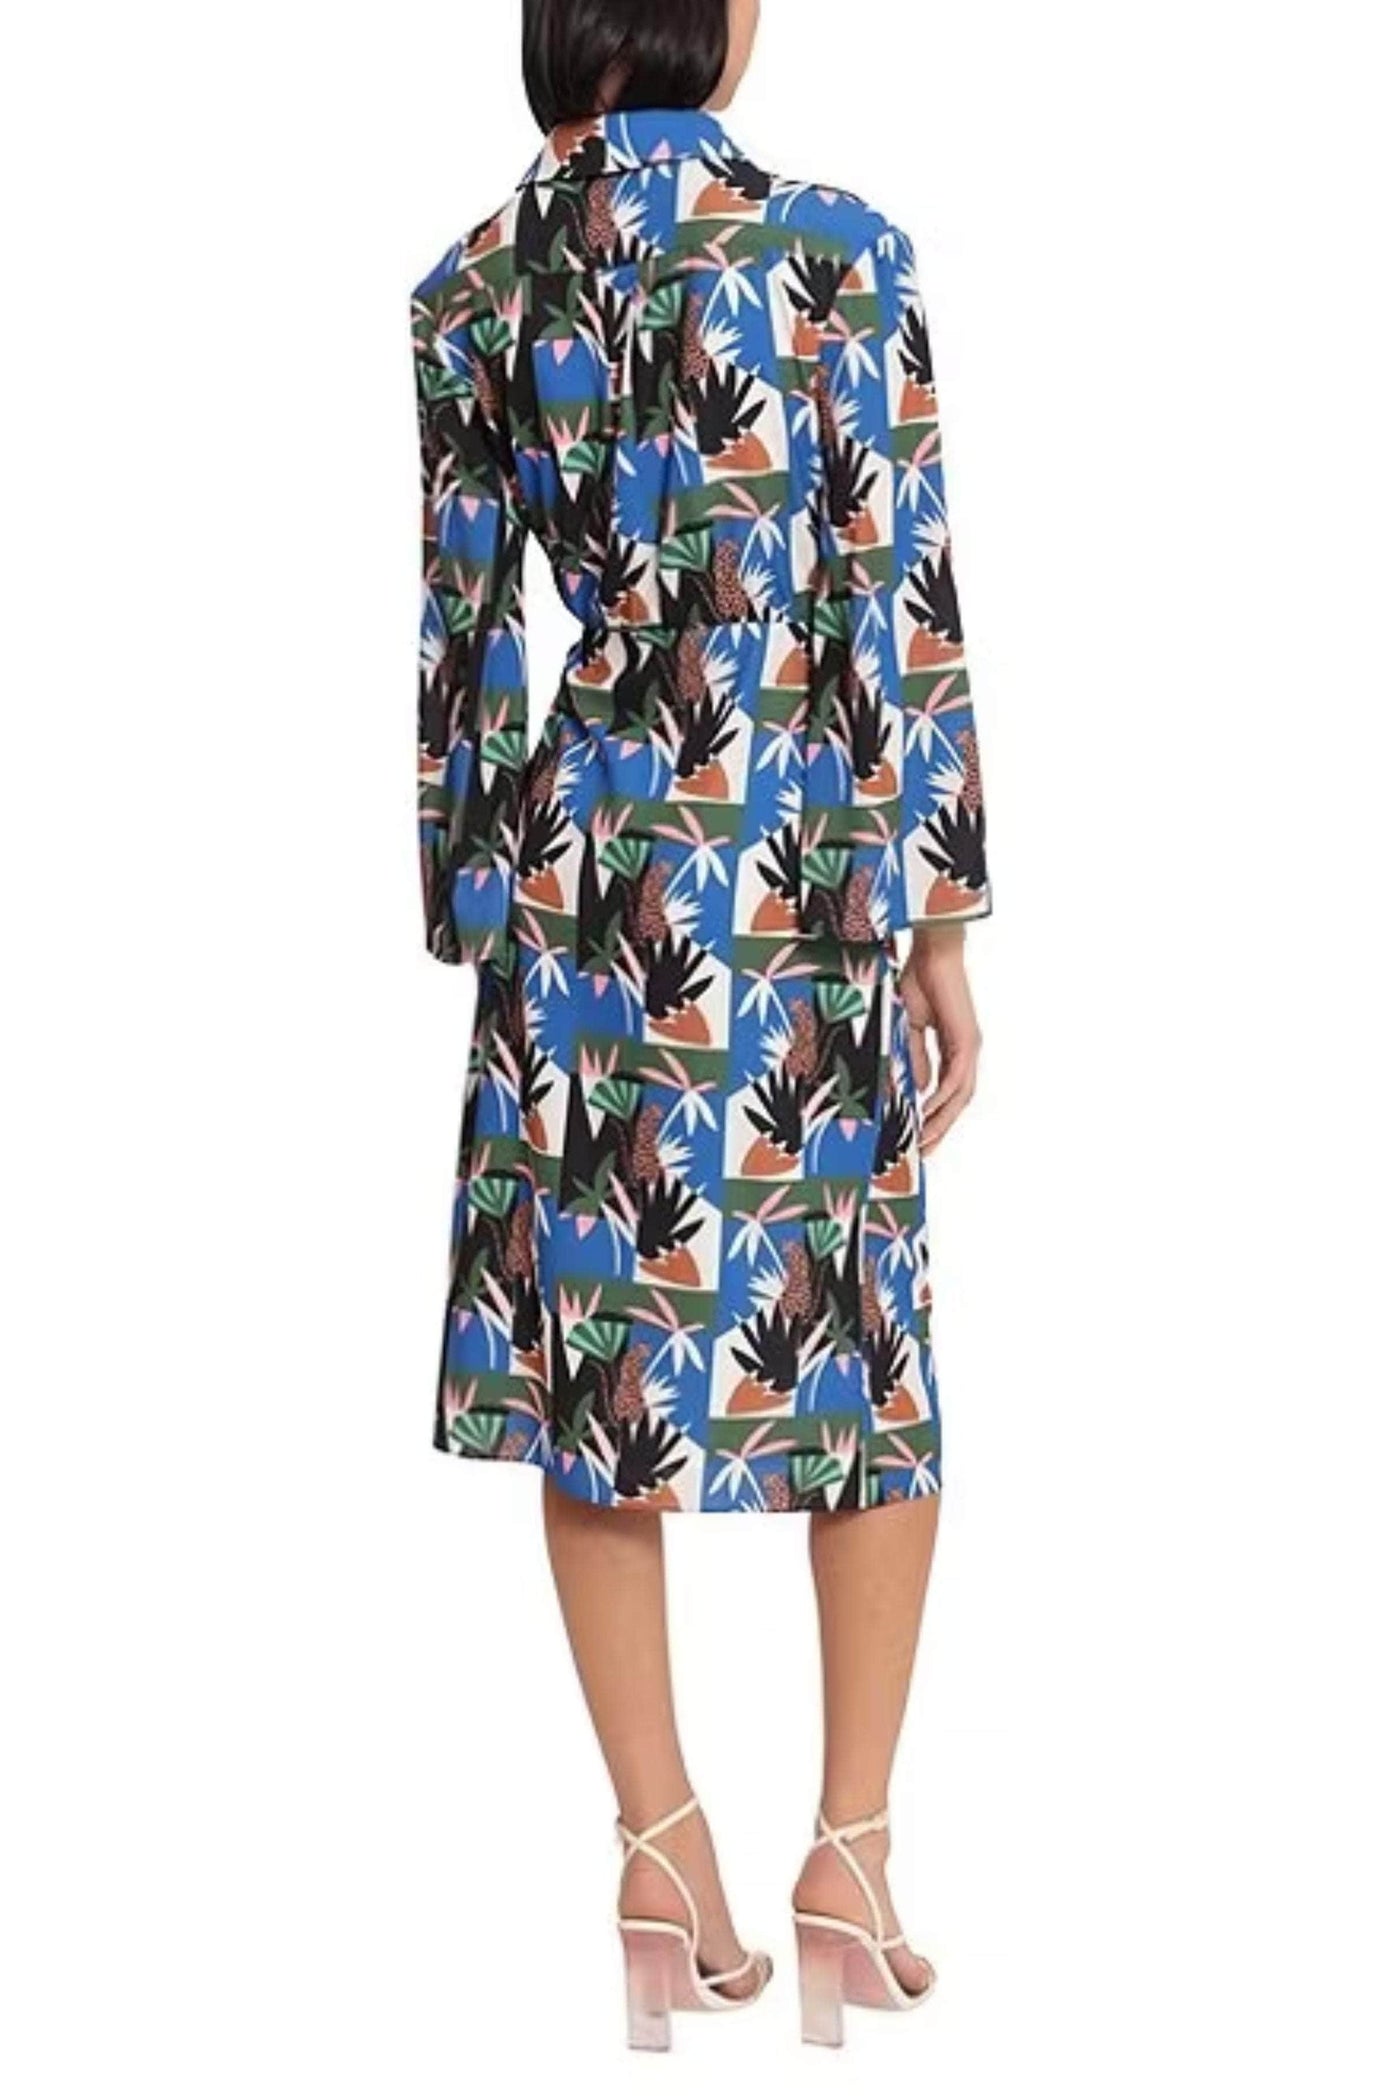 Donna Morgan D8248M - Jungle Print Long Sleeve Casual Dress Special Occasion Dresses